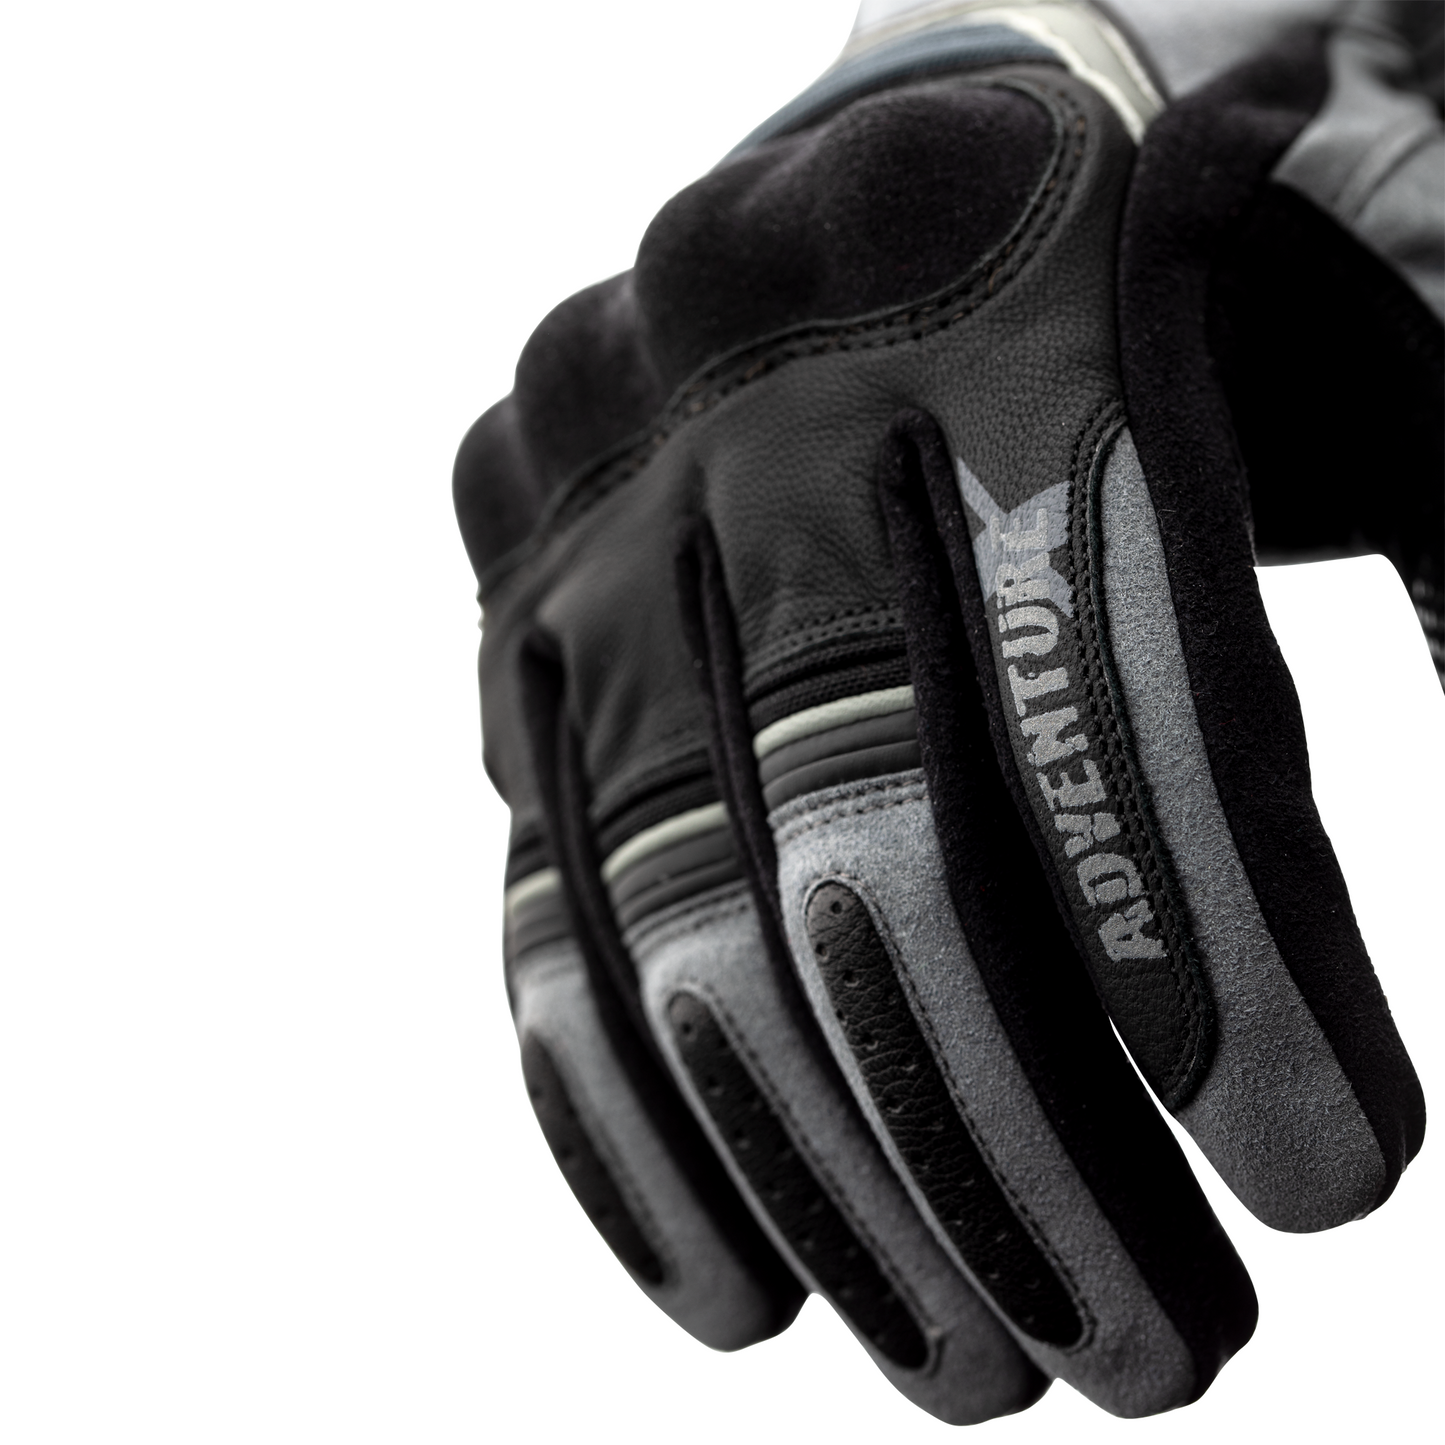 RST Adventure-X CE Gloves - Grey/Silver